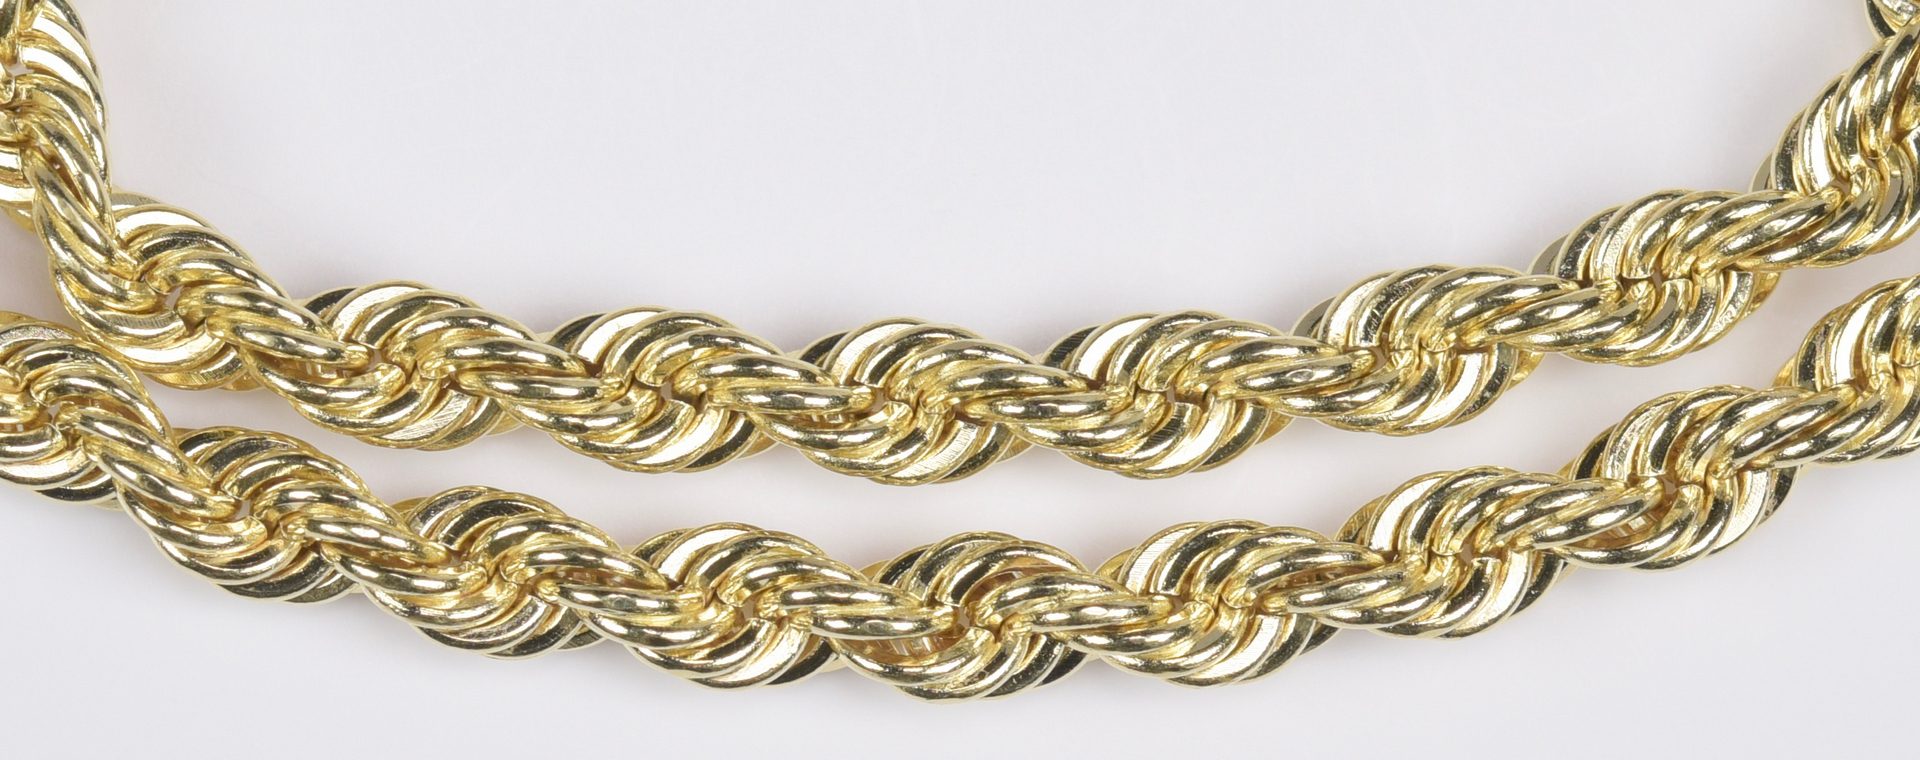 Lot 407: 14K Rope Necklace and Bracelet Set, 110 g